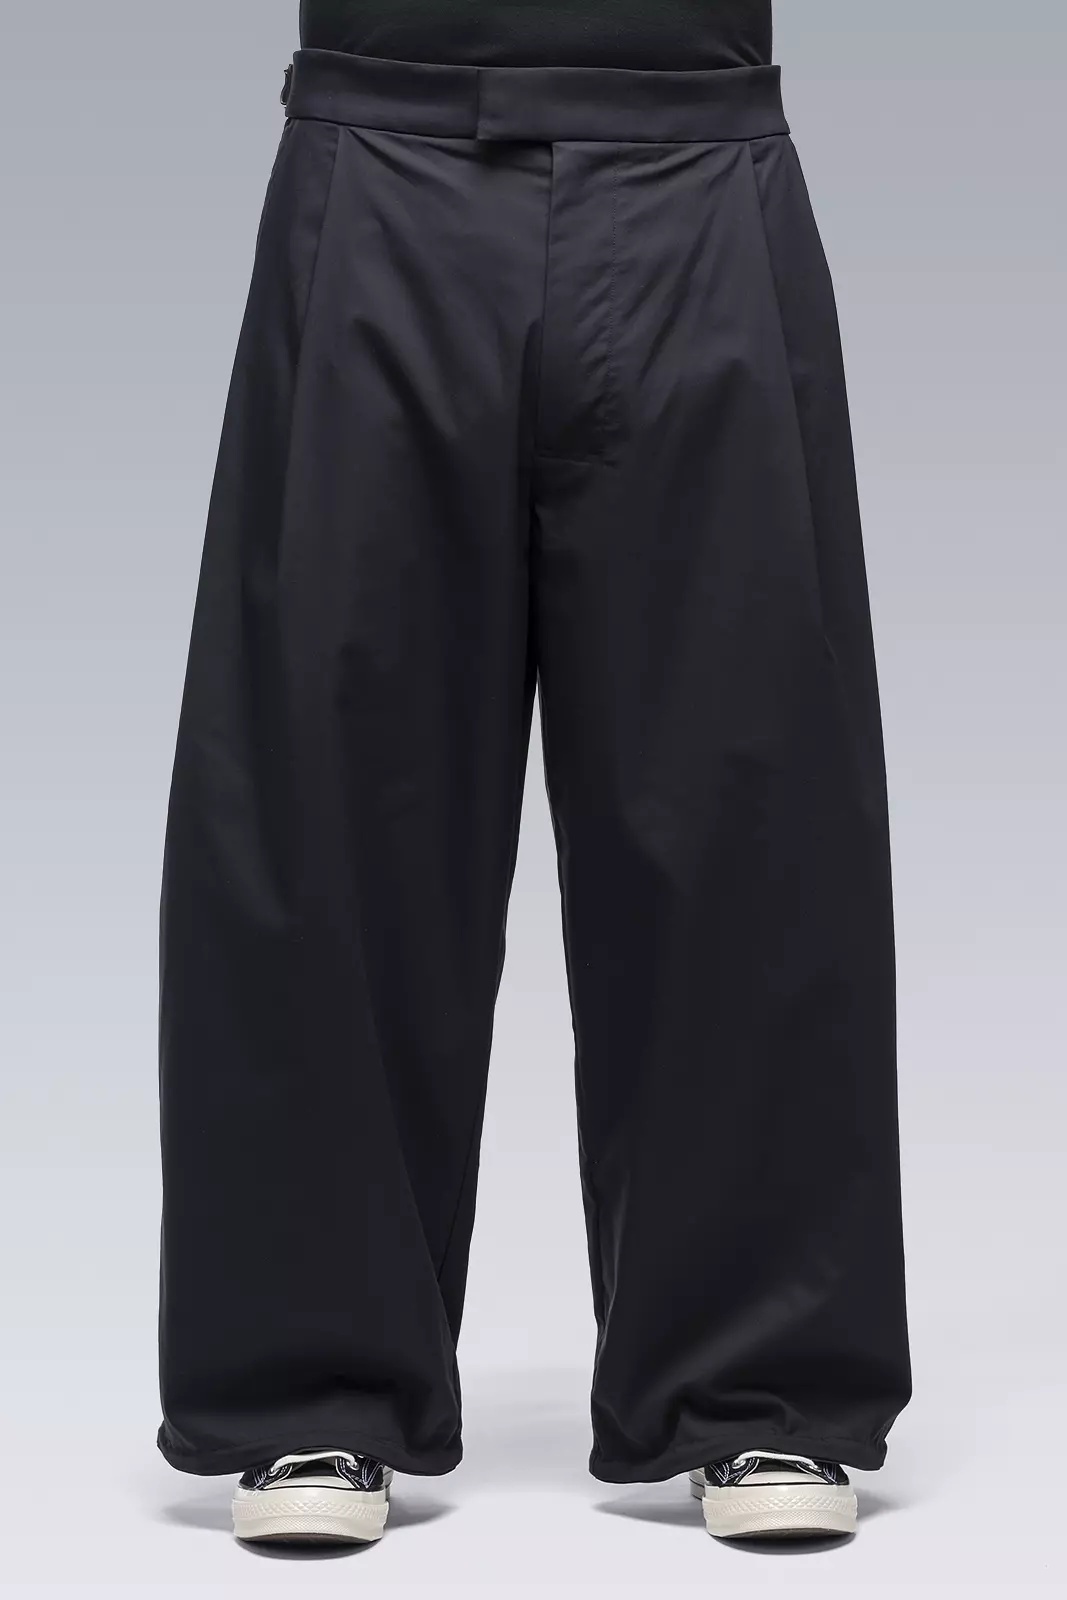 P48-CH Micro Twill Pleated Trouser Black - 2